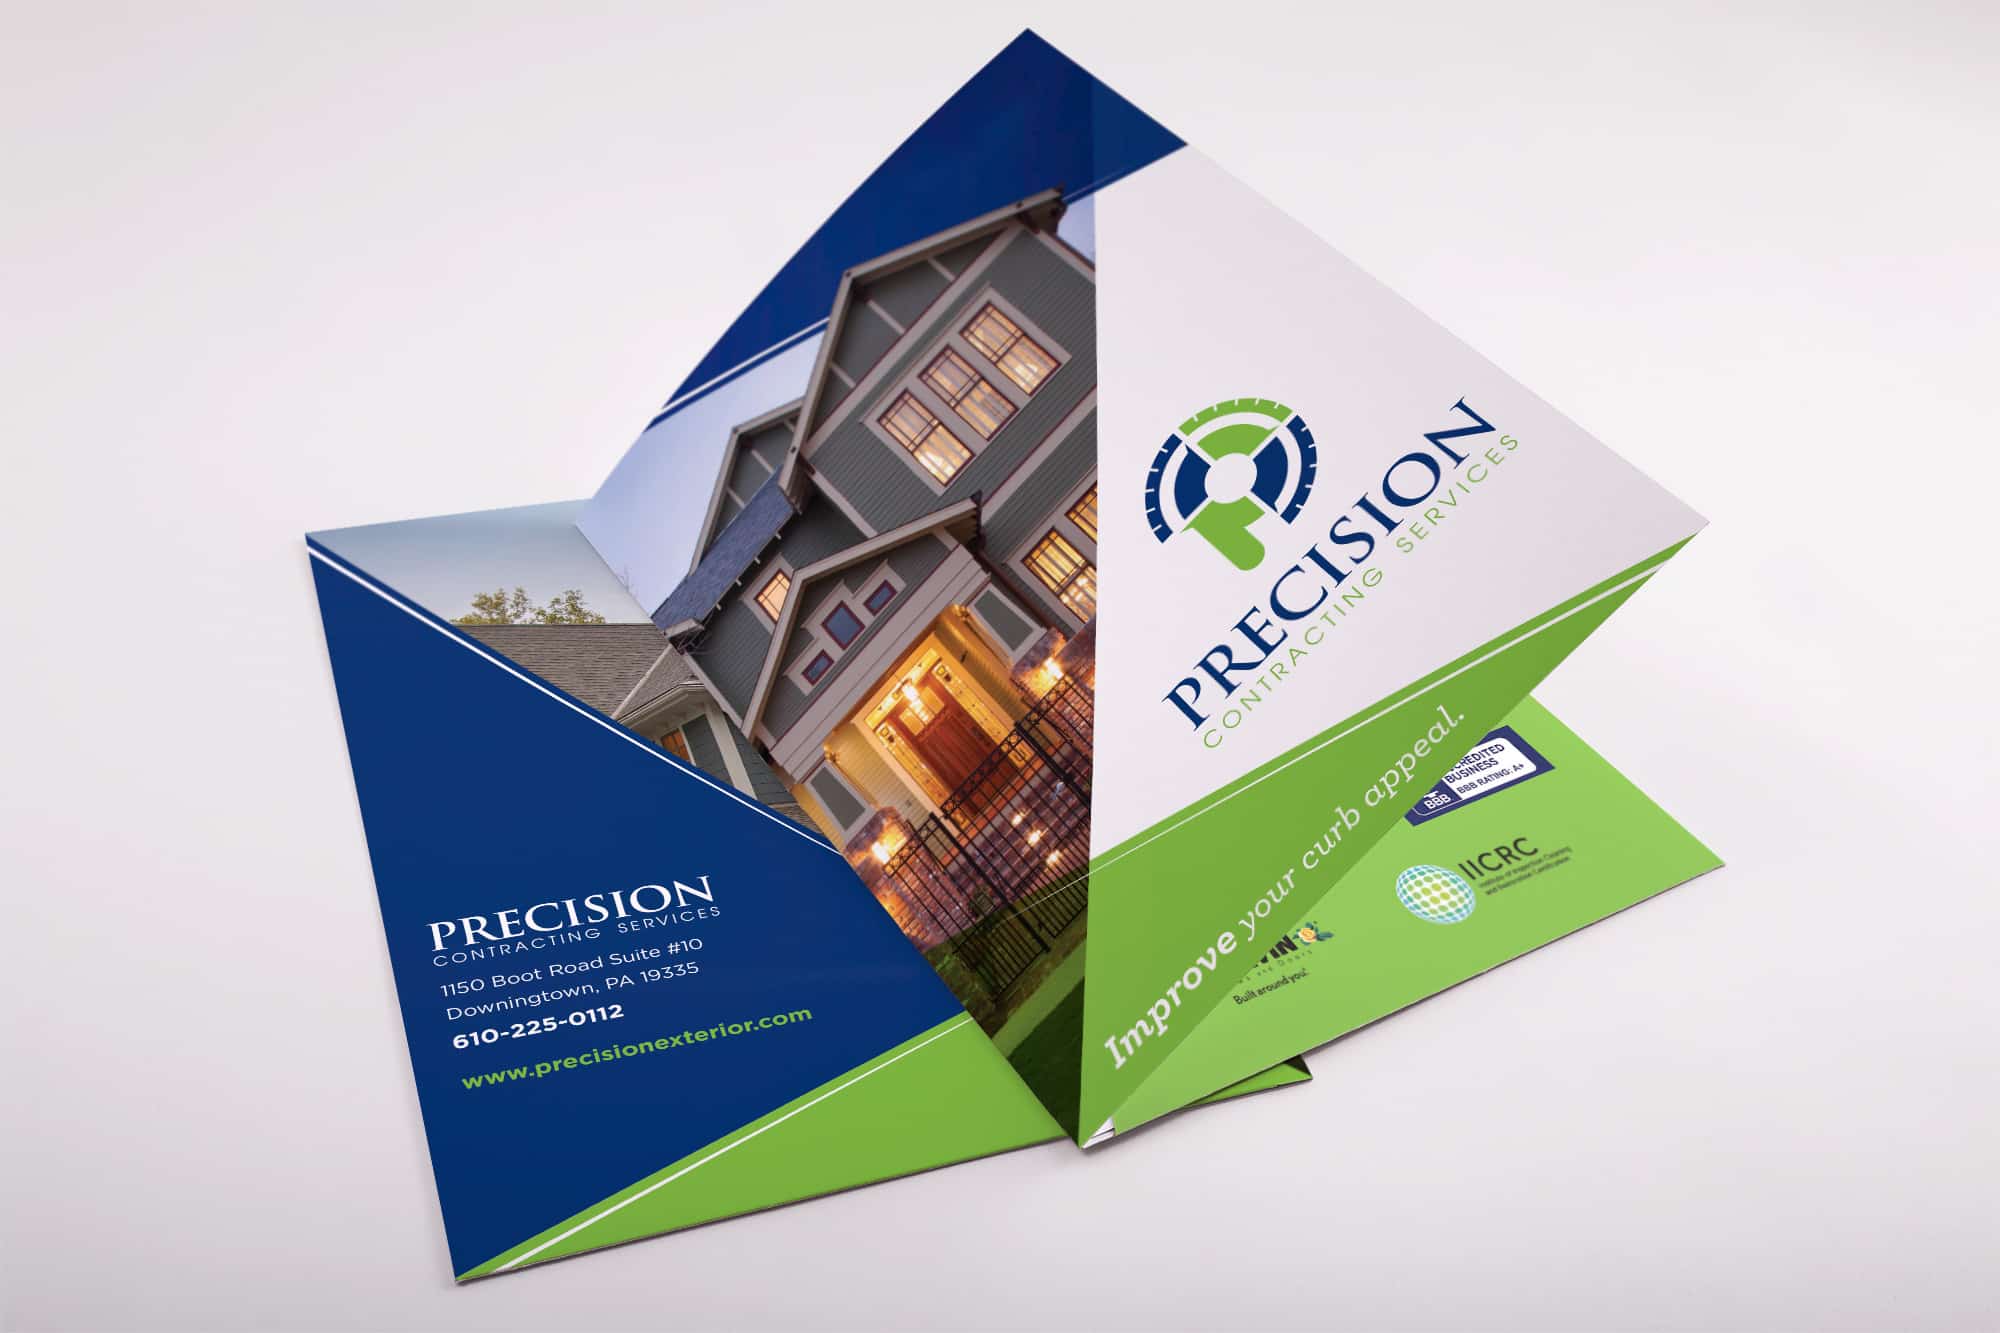 precision contracting services pocket folder